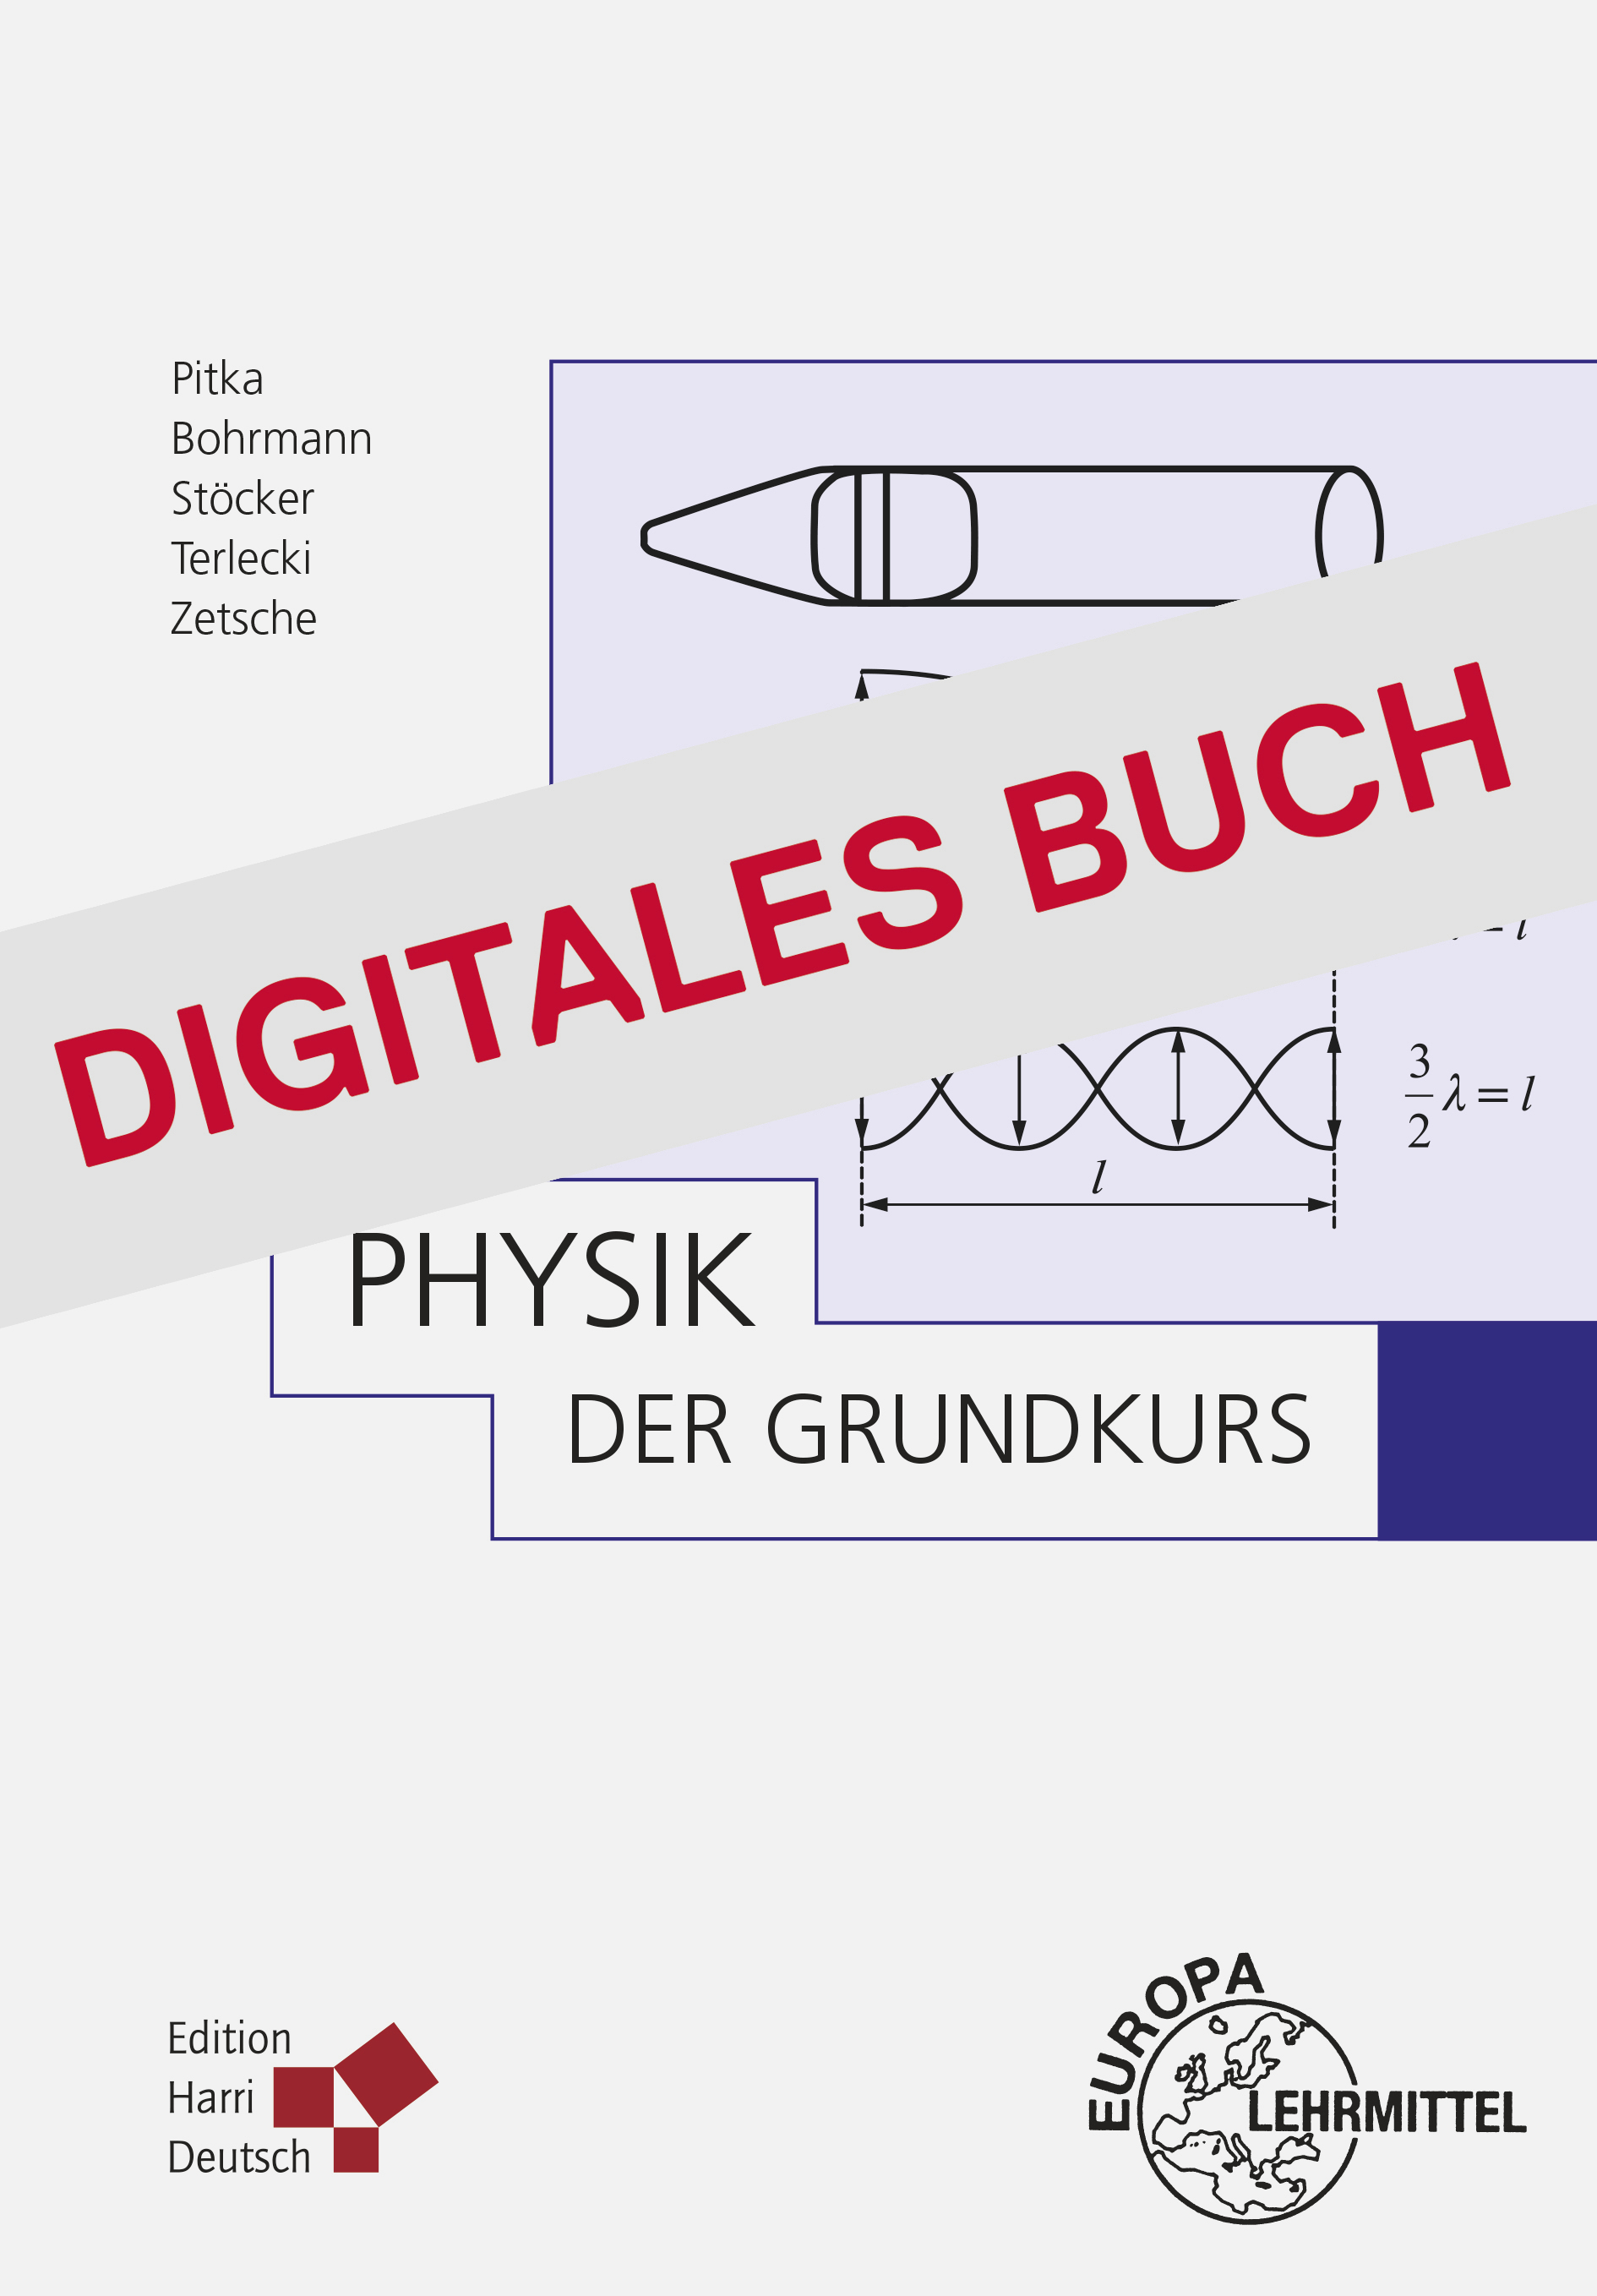 Physik - Der Grundkurs - Digitales Buch